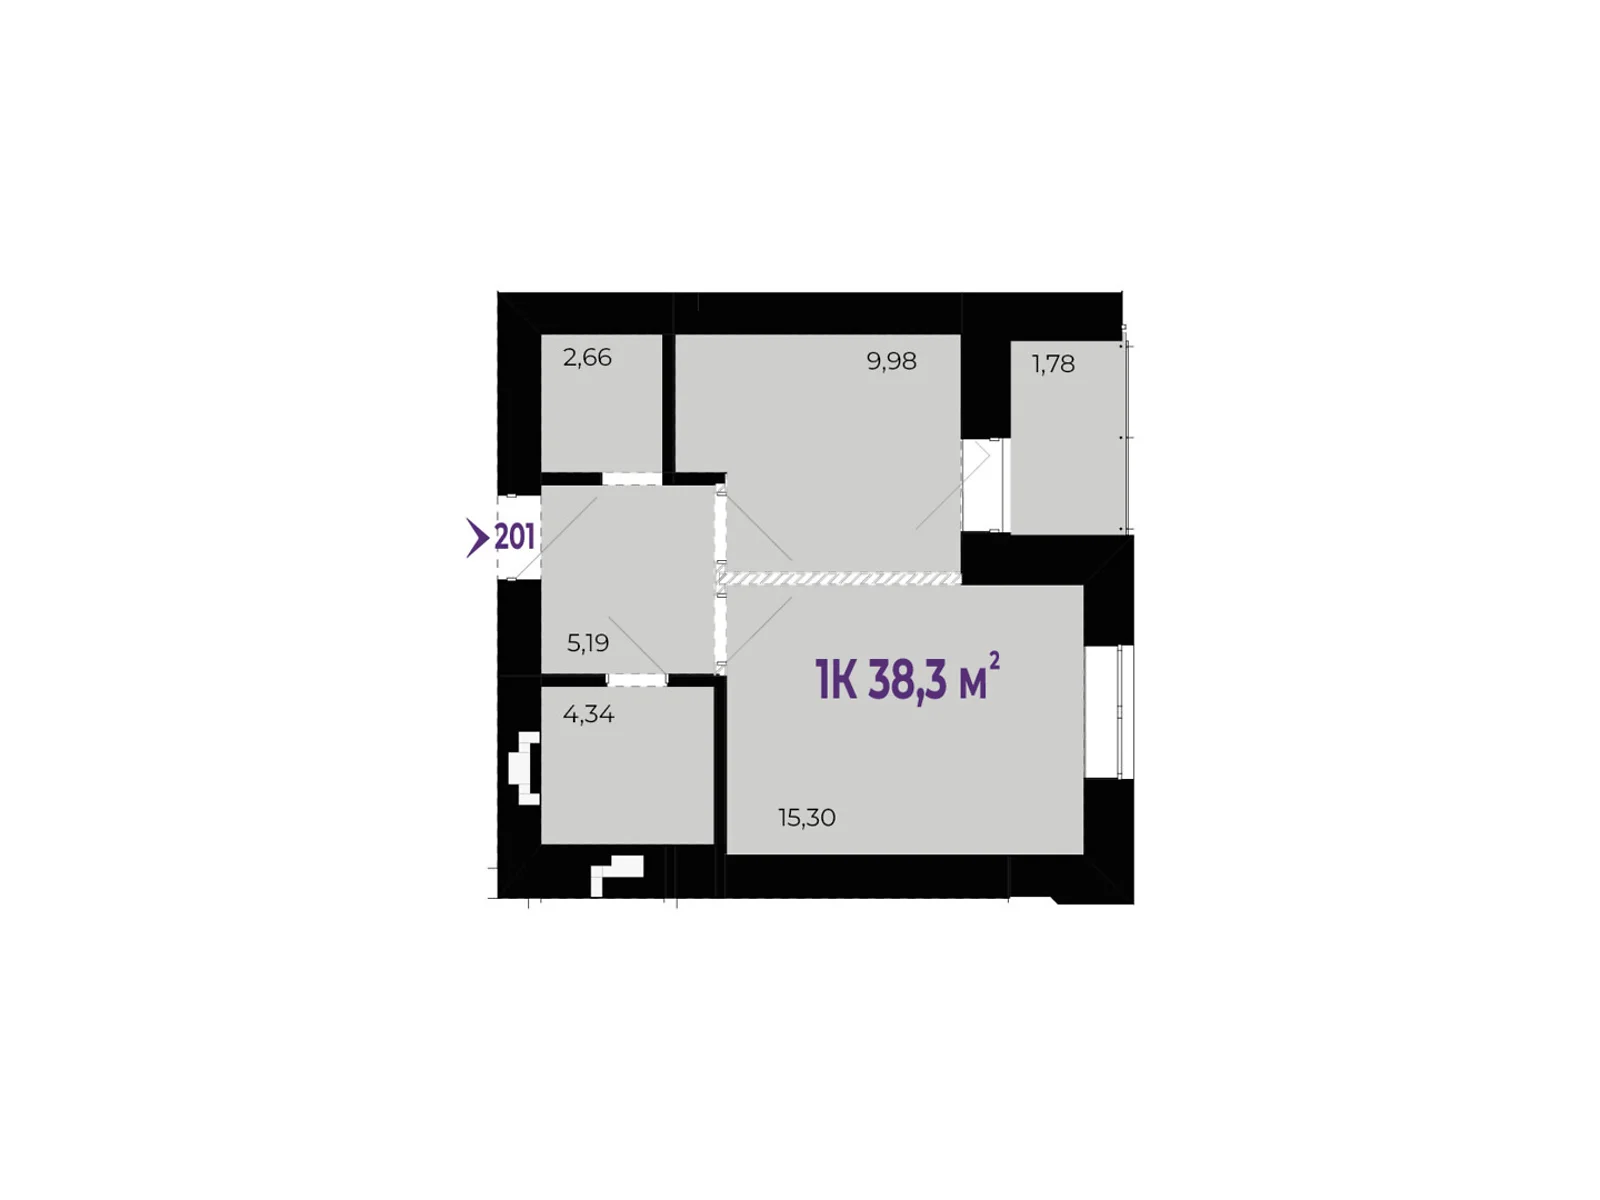 Продается 1-комнатная квартира 38.3 кв. м в Ивано-Франковске - фото 1